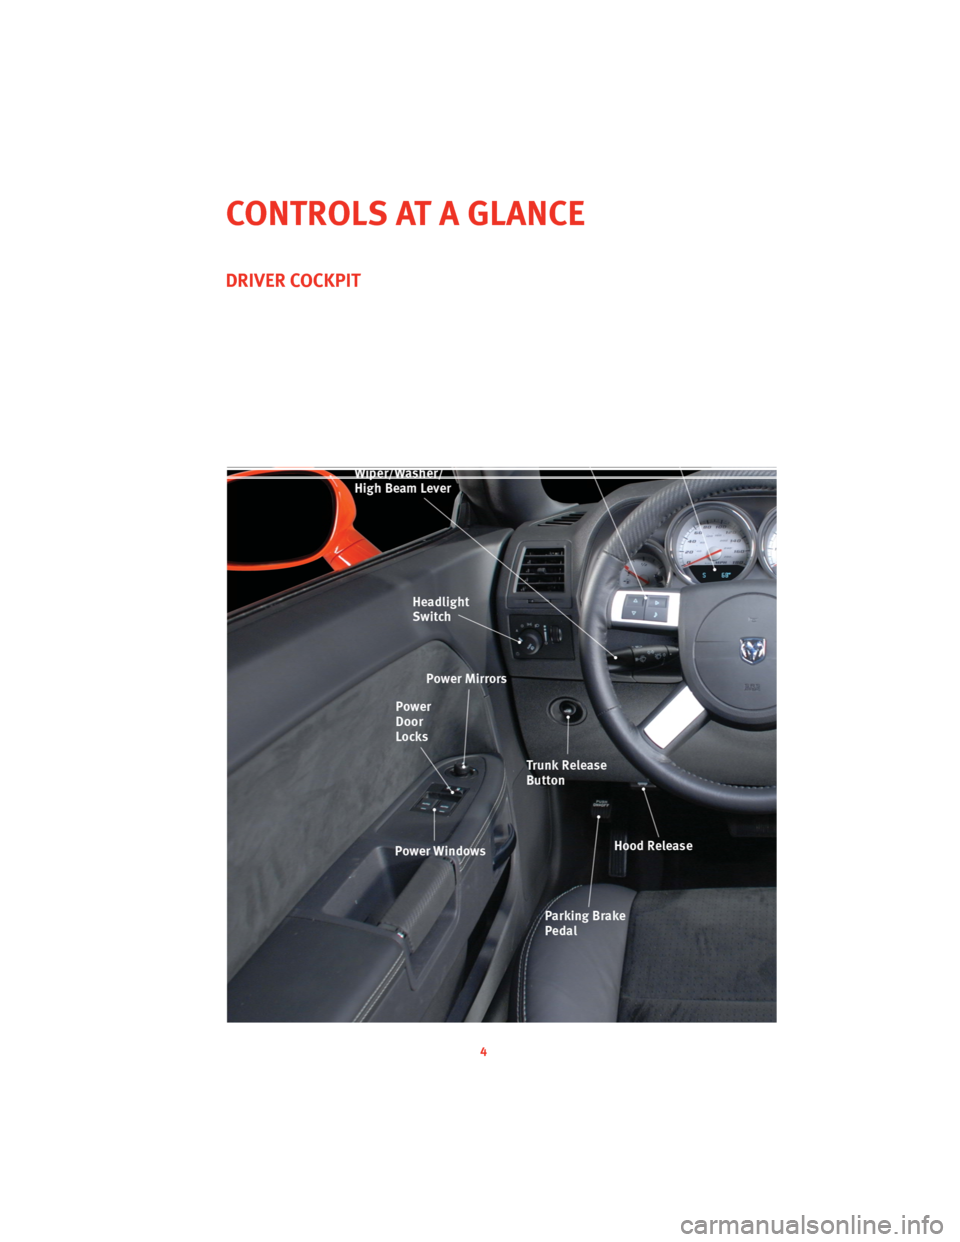 DODGE CHALLENGER 2010 3.G User Guide DRIVER COCKPIT
4
CONTROLS AT A GLANCE 